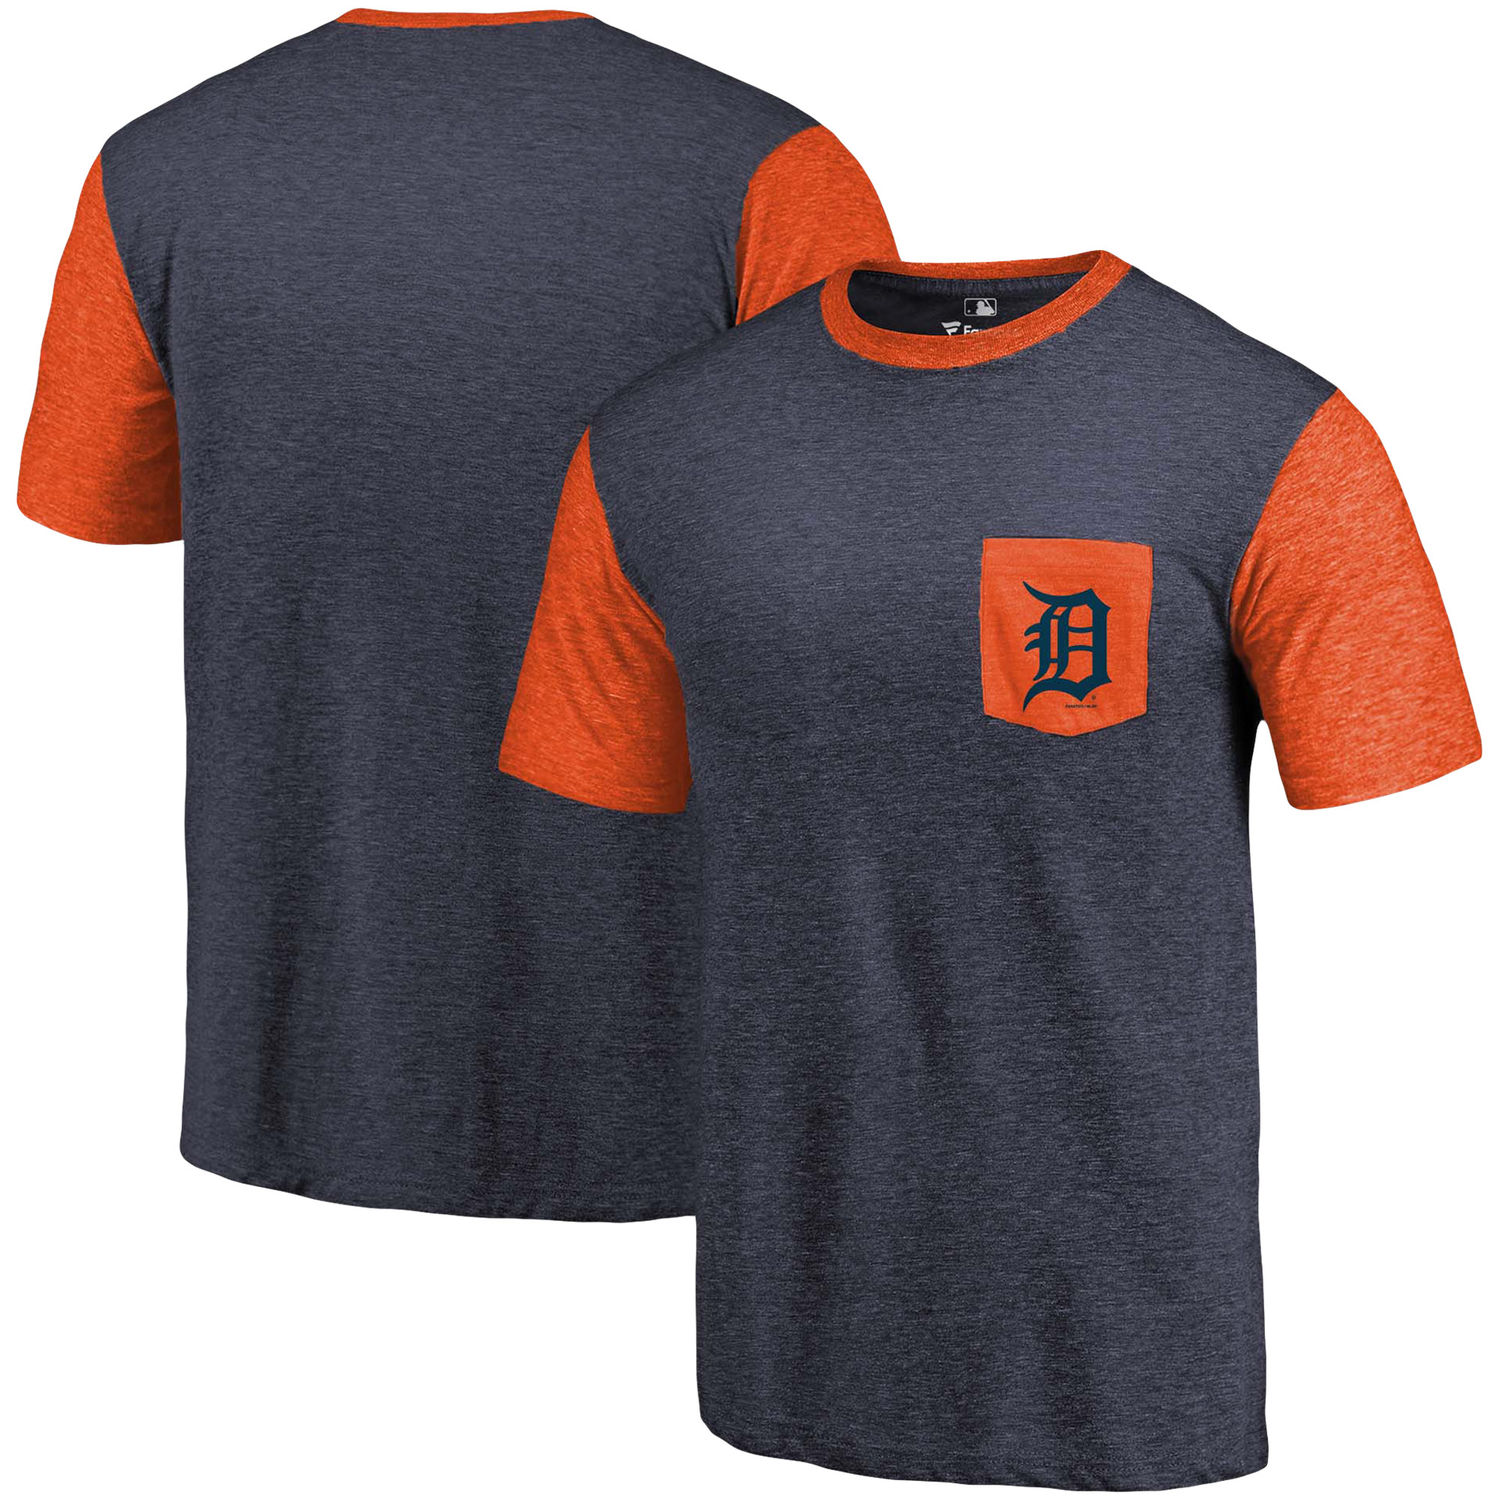 Men's Detroit Tigers Fanatics Branded Navy/Orange Refresh Pocket T-Shirt